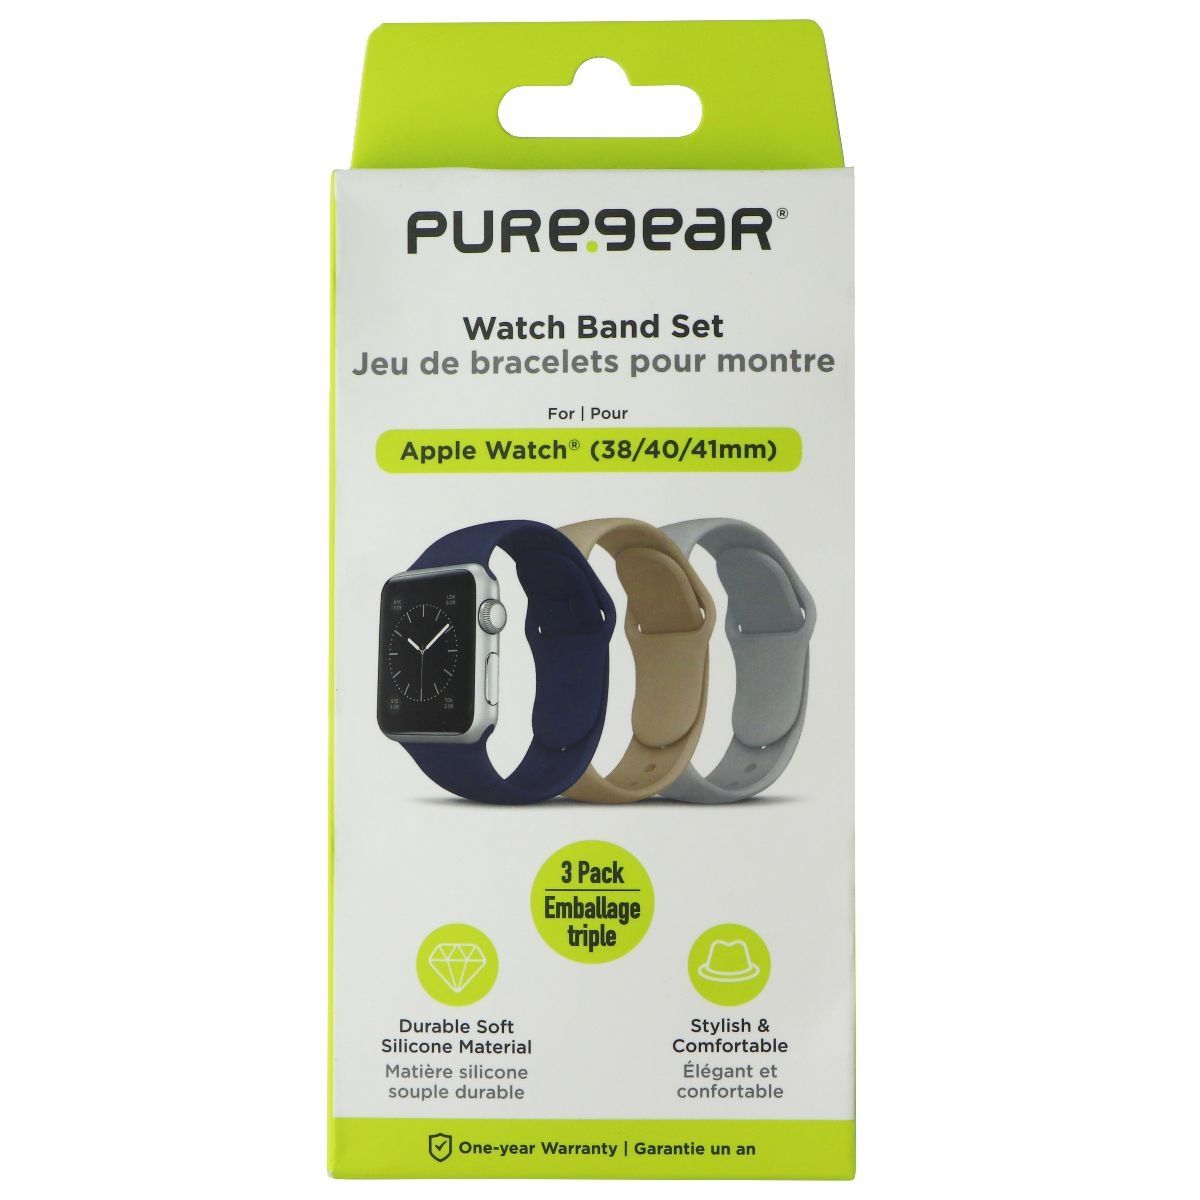 PureGear Watch Band Set for Apple Watch 38/40/41mm - Gray, Blue, Tan (3 Pack) Smart Watch Accessories - Watch Bands PureGear    - Simple Cell Bulk Wholesale Pricing - USA Seller